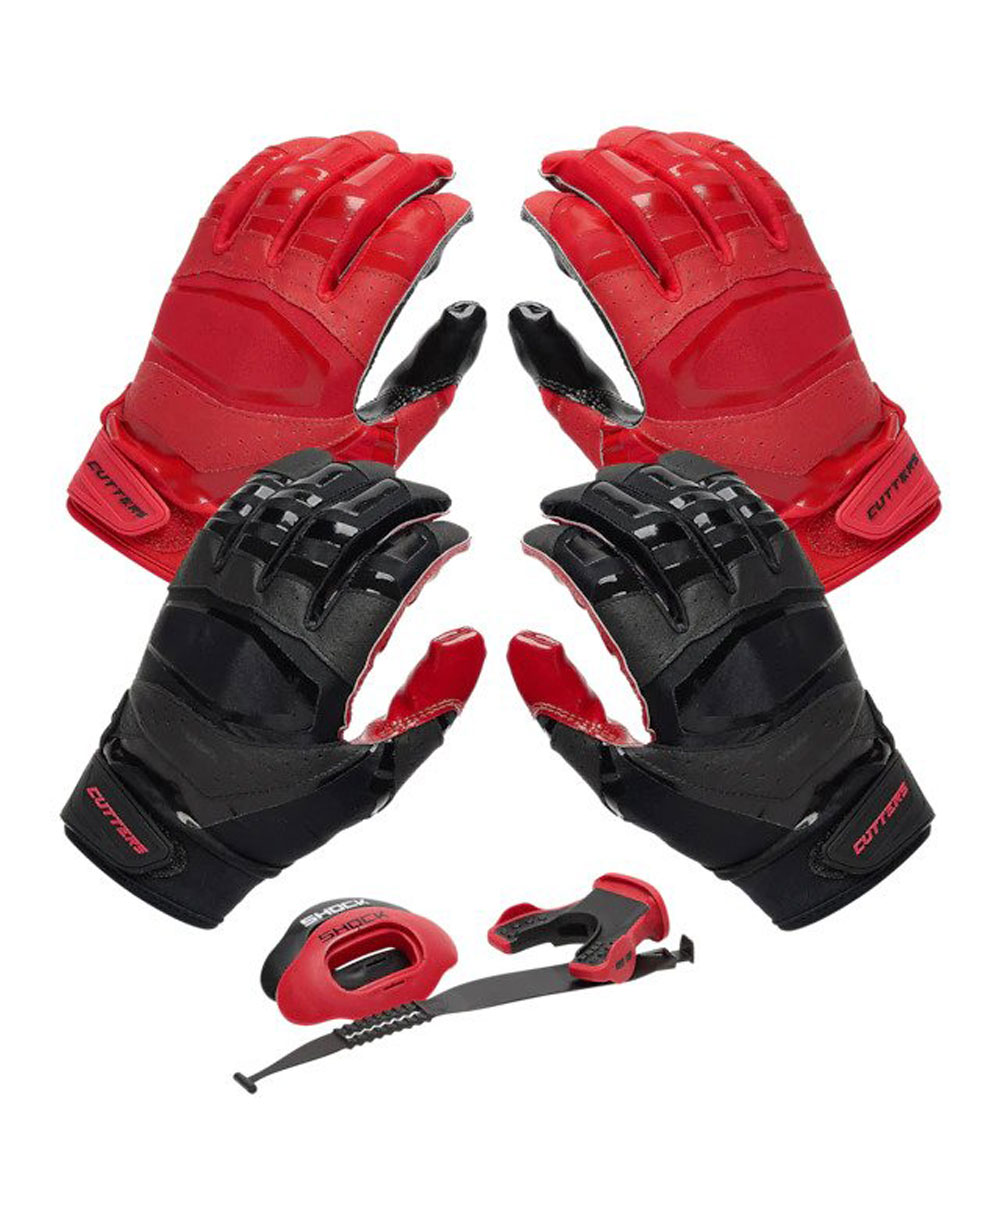 https://www.anygivensunday.shop/2618-large_default/cutters-rev-pro-30-solid-flip-combo-pack-mens-football-gloves-red-black-pack-of-2.jpg